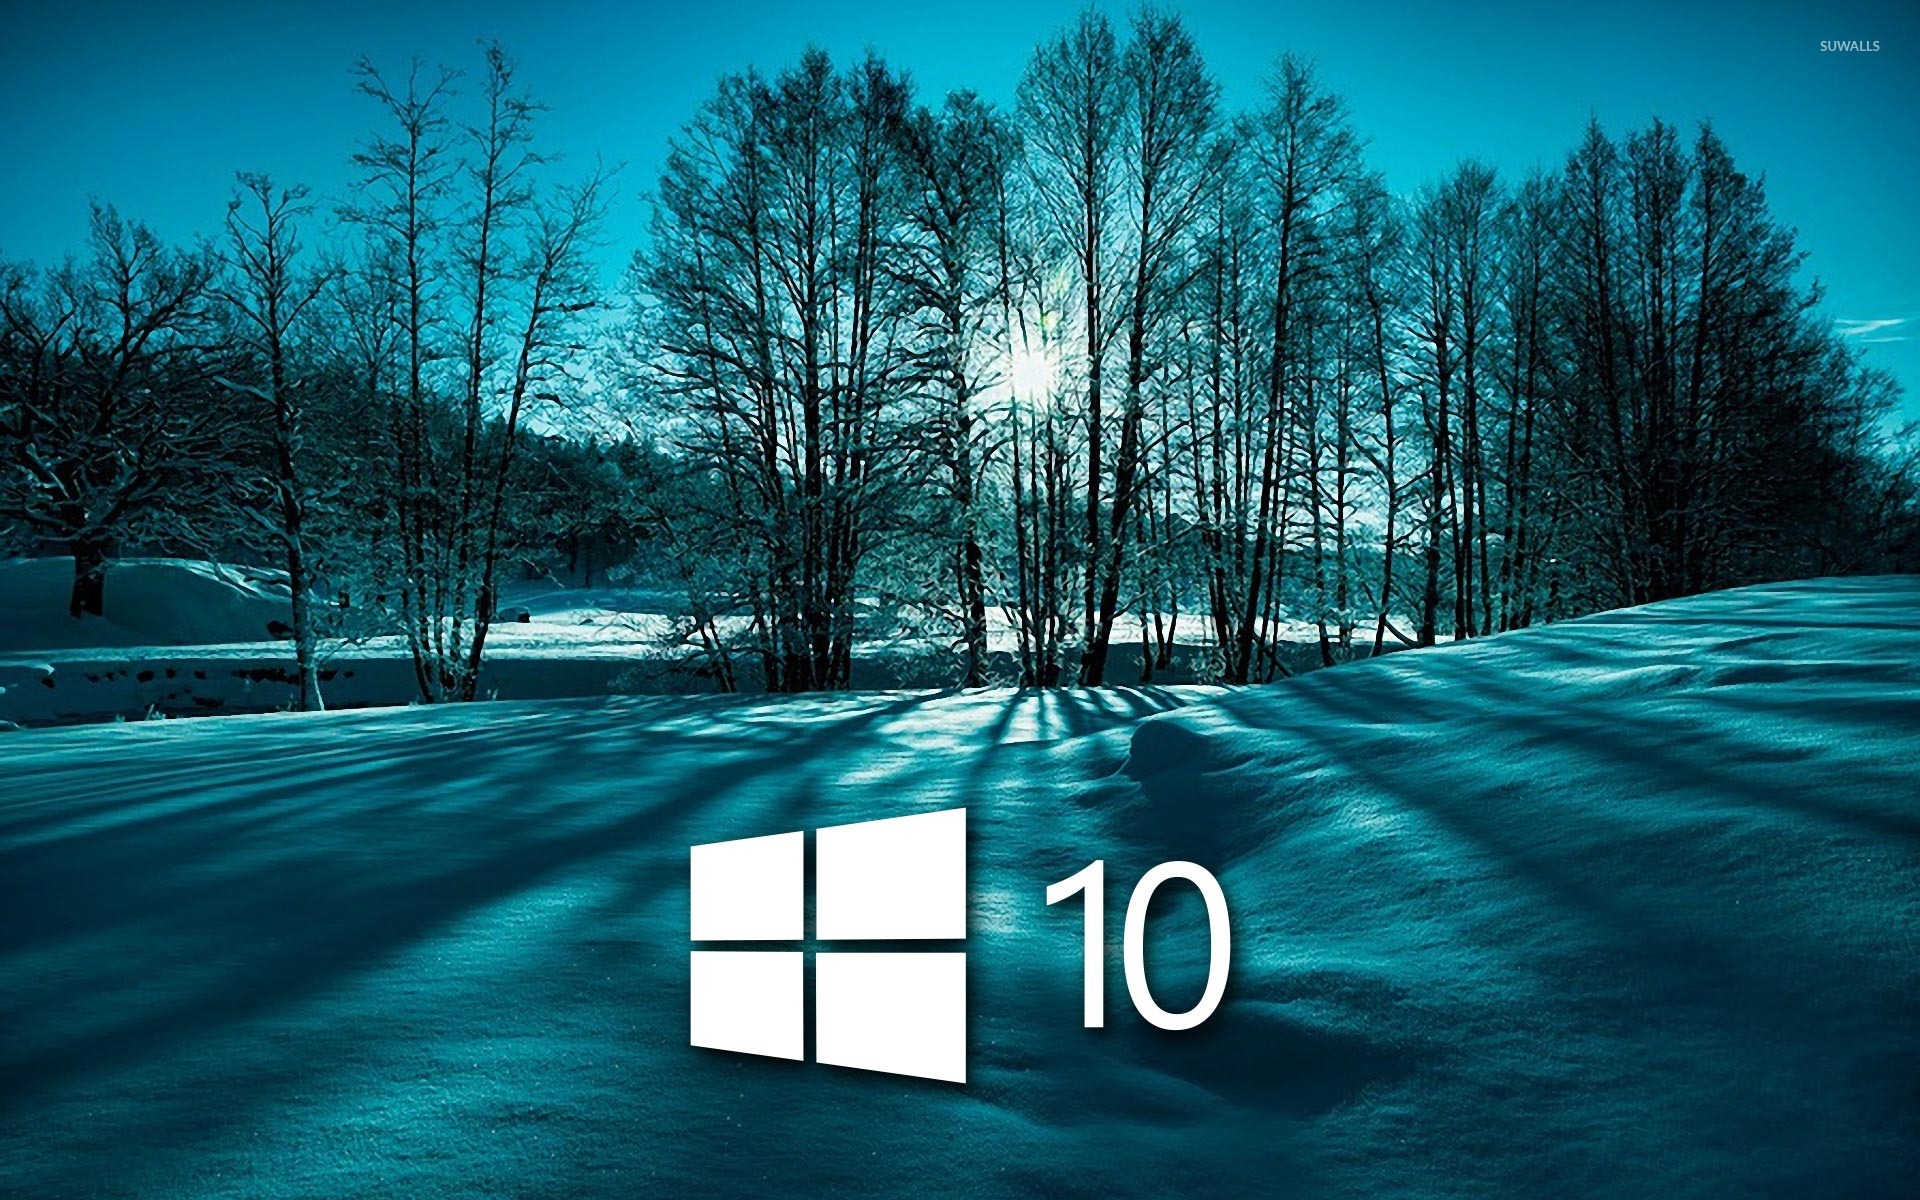 47+] Windows 10 Logo Wallpaper 1920x1080 - WallpaperSafari